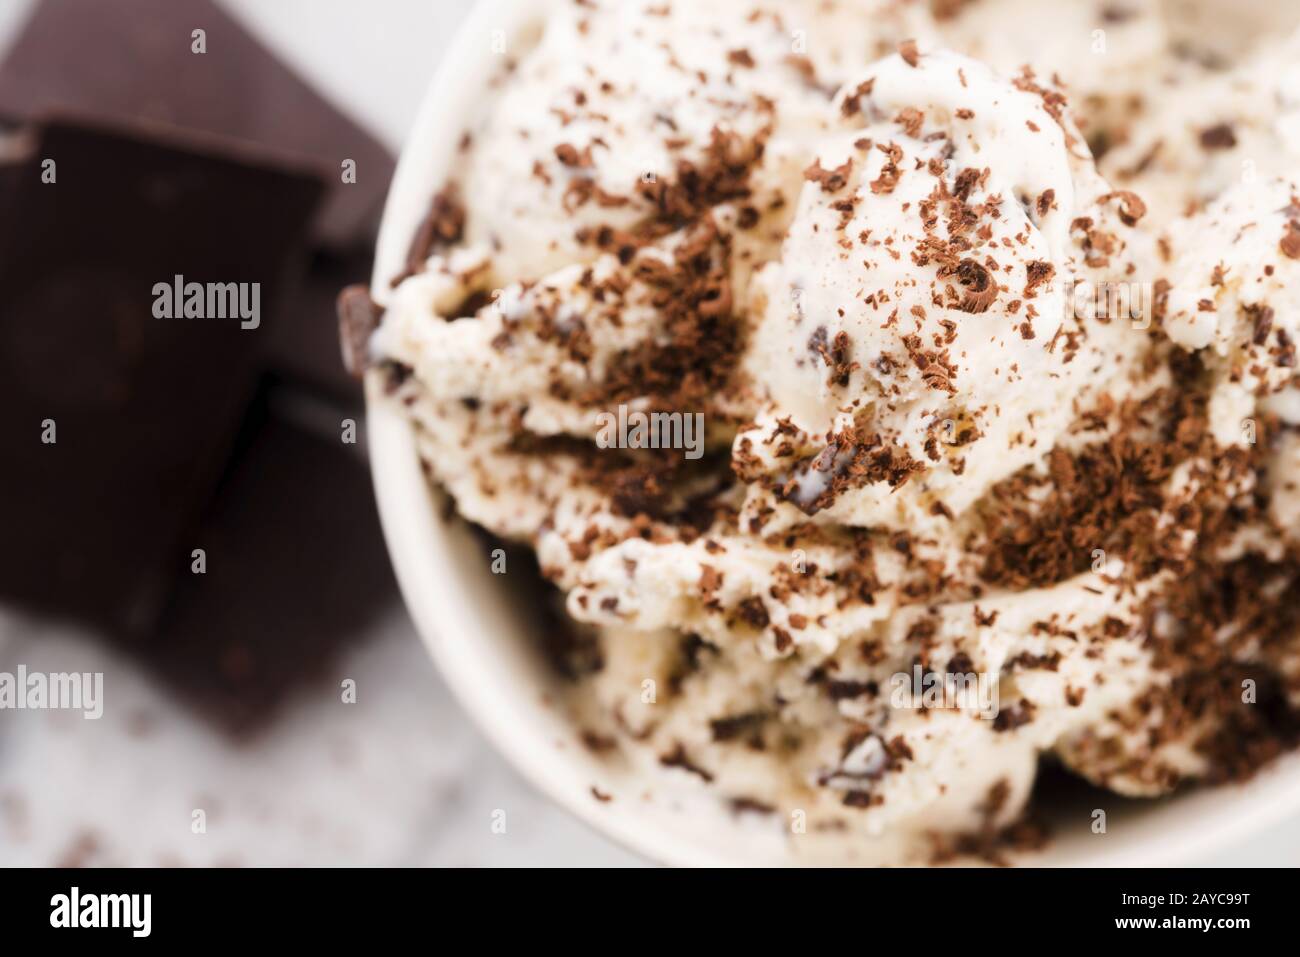 https://c8.alamy.com/comp/2AYC99T/vanilla-ice-cream-with-chocolate-chips-straciatella-fresh-sorbet-2AYC99T.jpg